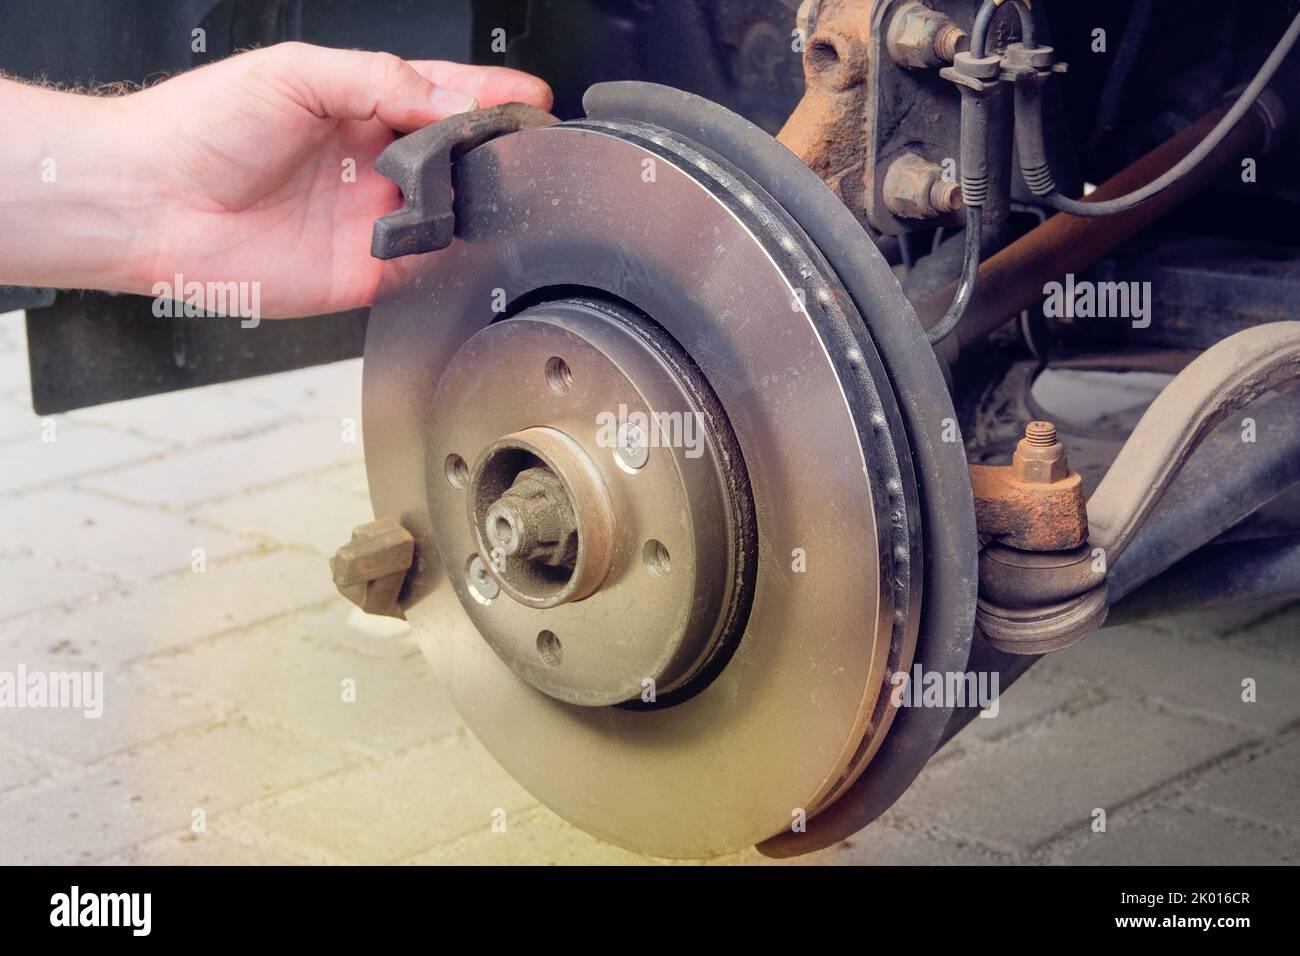 Automobile maintenance concept. Wheel balancing or repair. Cars and transportation repair, close up. Stock Photo